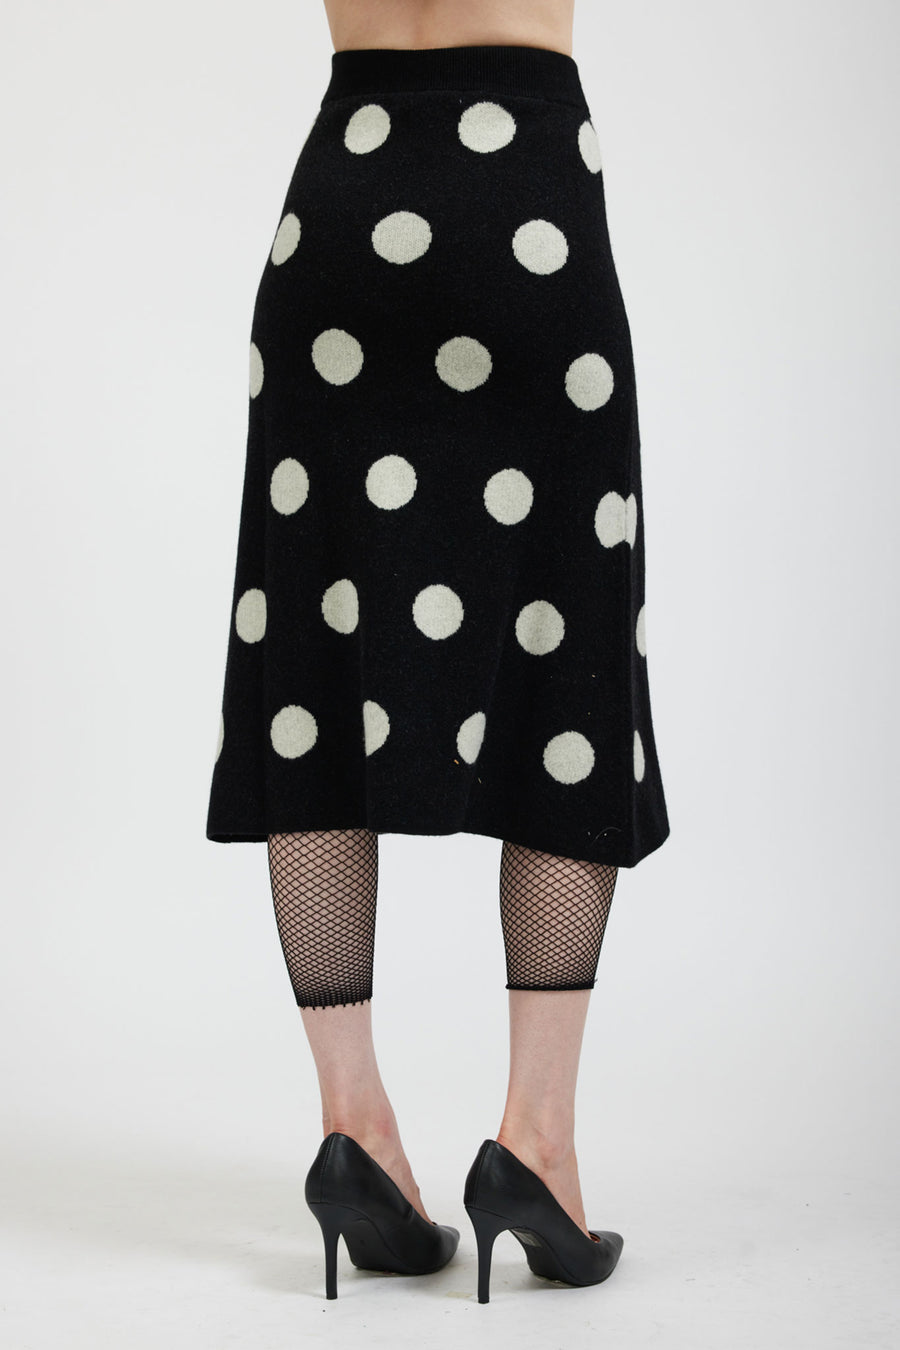 BATSHEVA - Saga Polka Dot Cashmere Skirt in Black